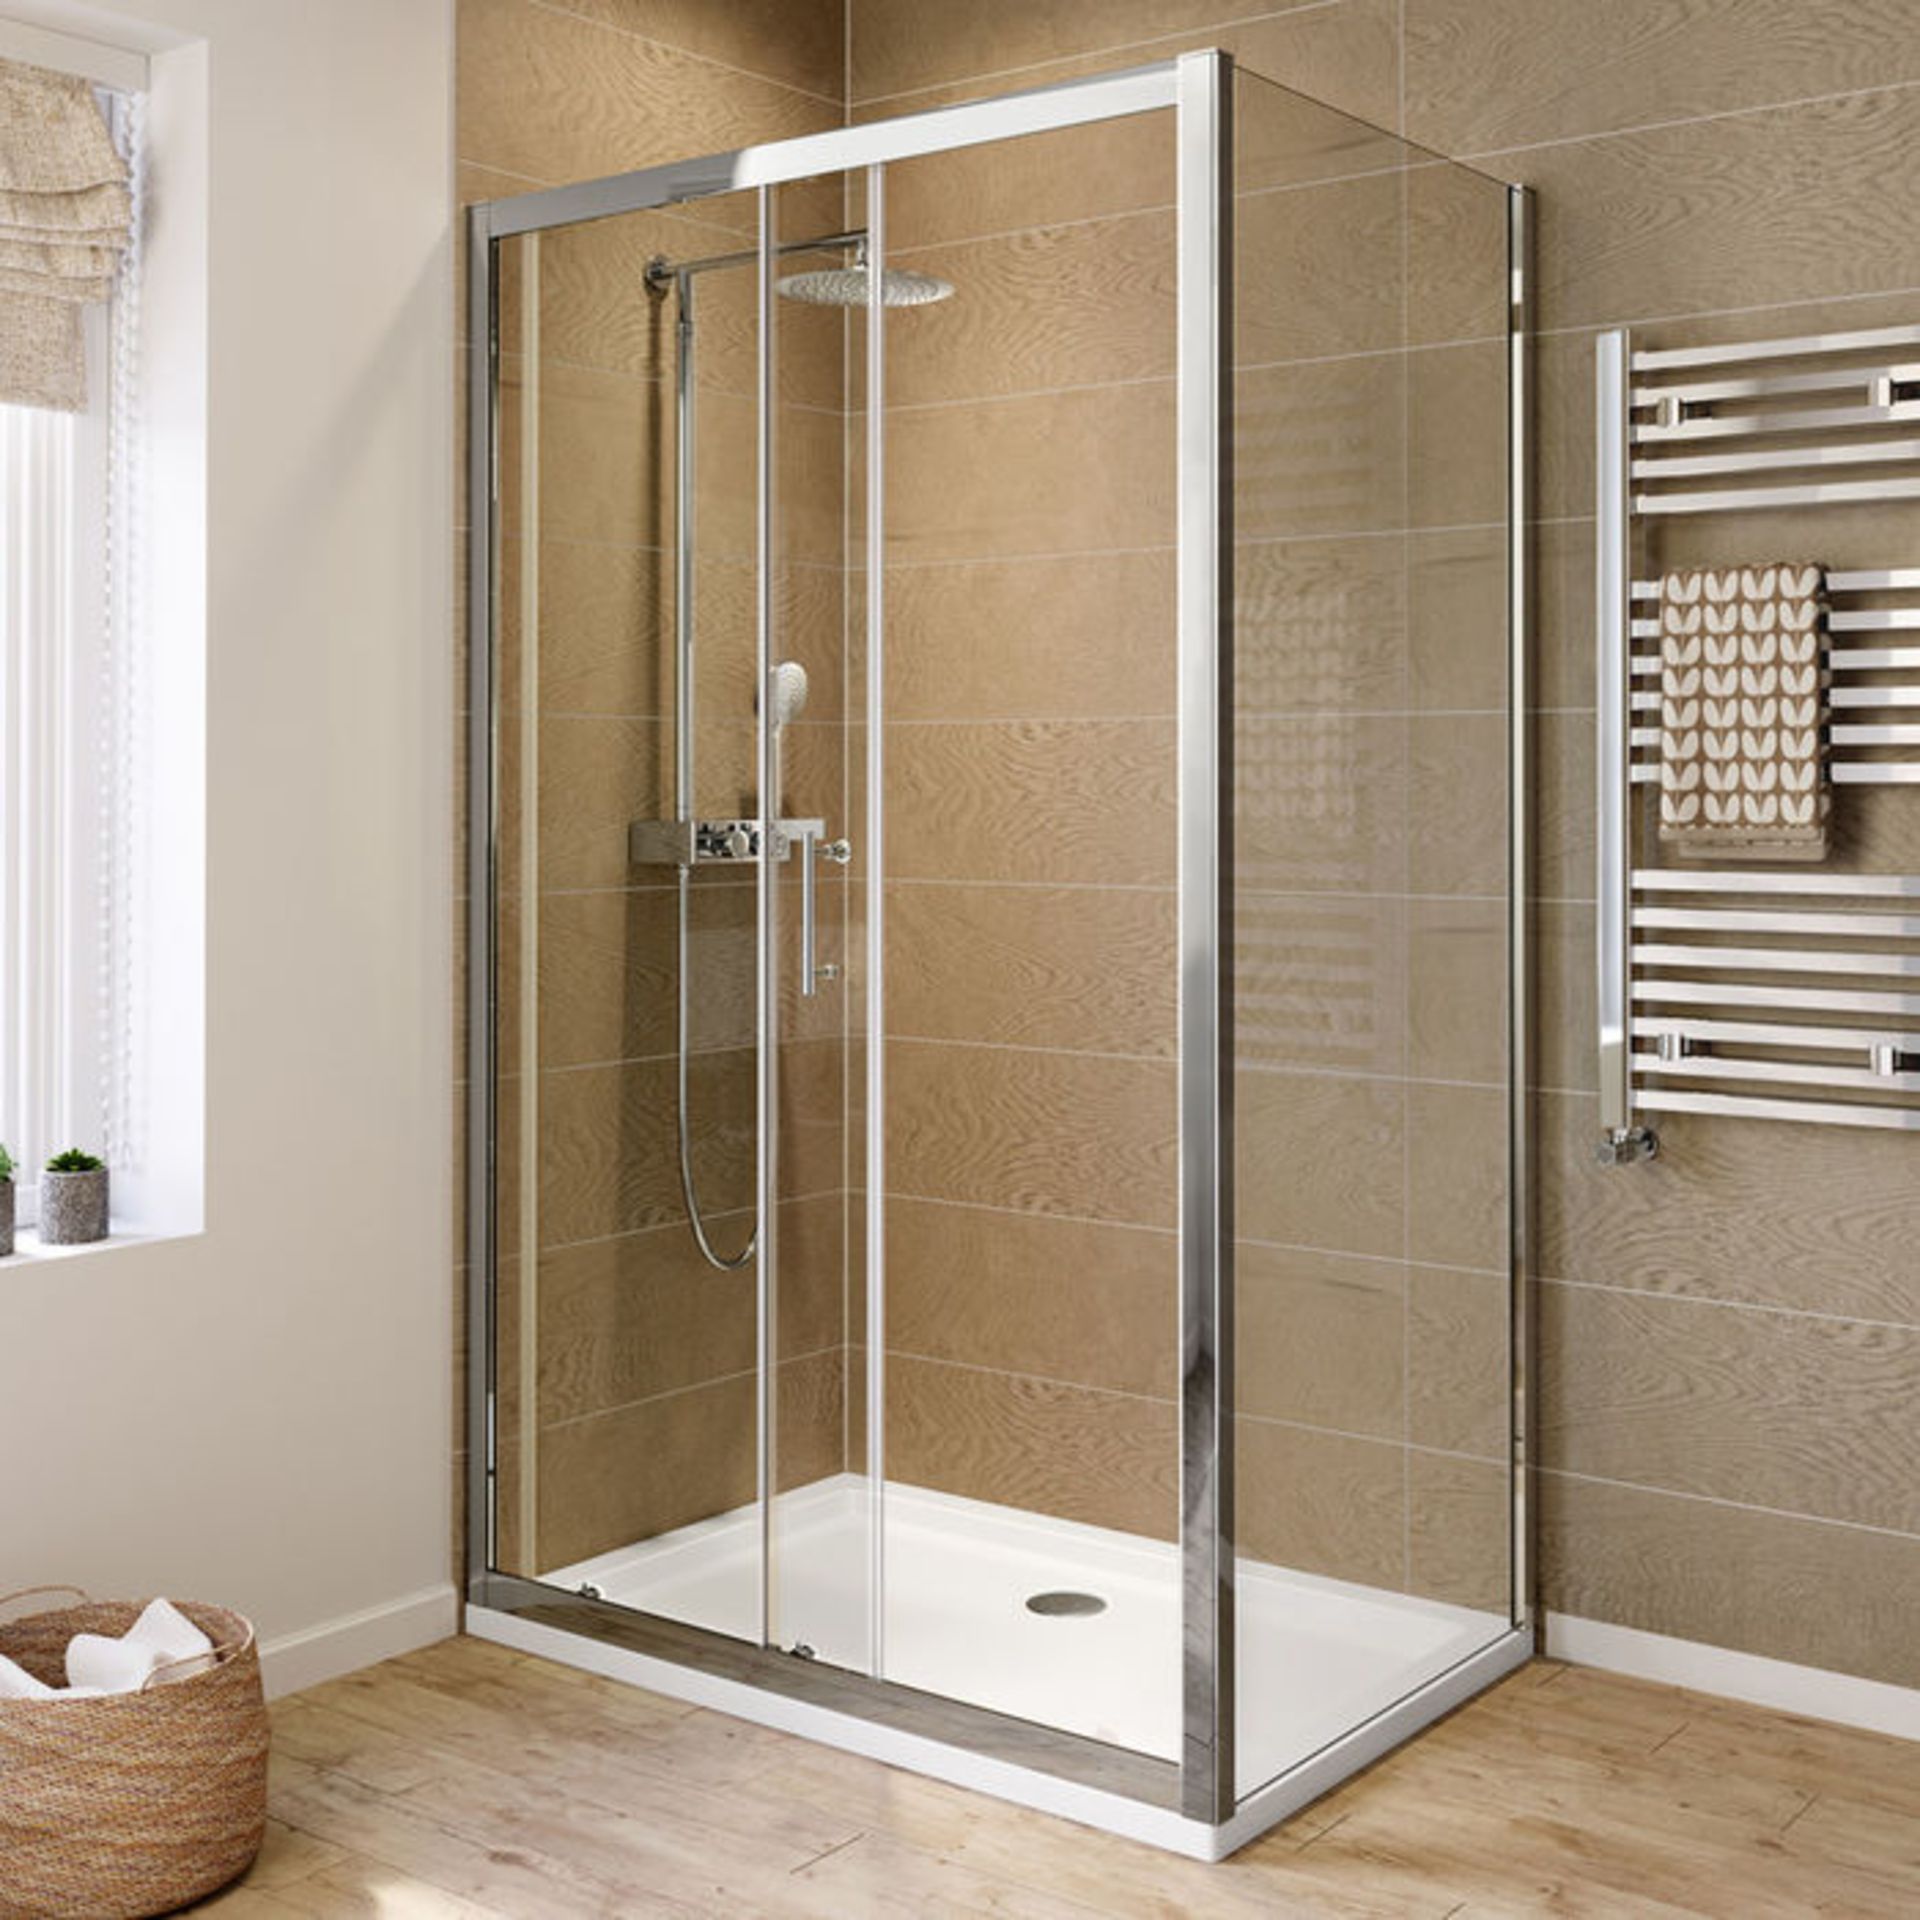 New Twyfords 1200x900mm - 6mm - Elements Sliding Door Shower Enclosure. RRP £363.99. G68503C1+... - Image 2 of 4